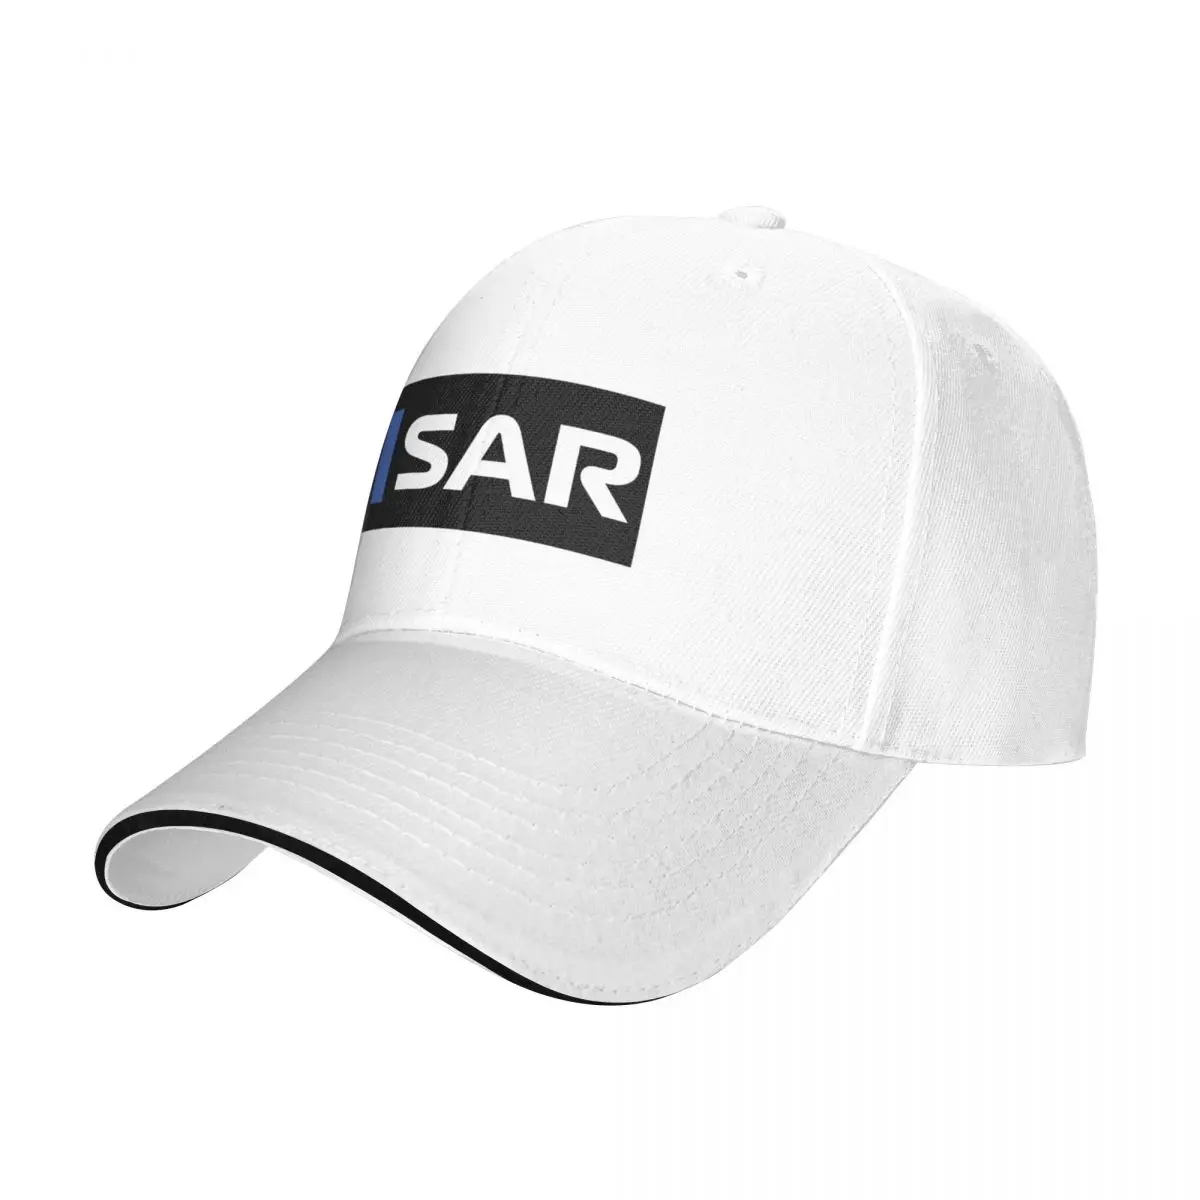 

New Logan Sargeant Williams F1 Cap Baseball Cap Caps Women's hat Men's